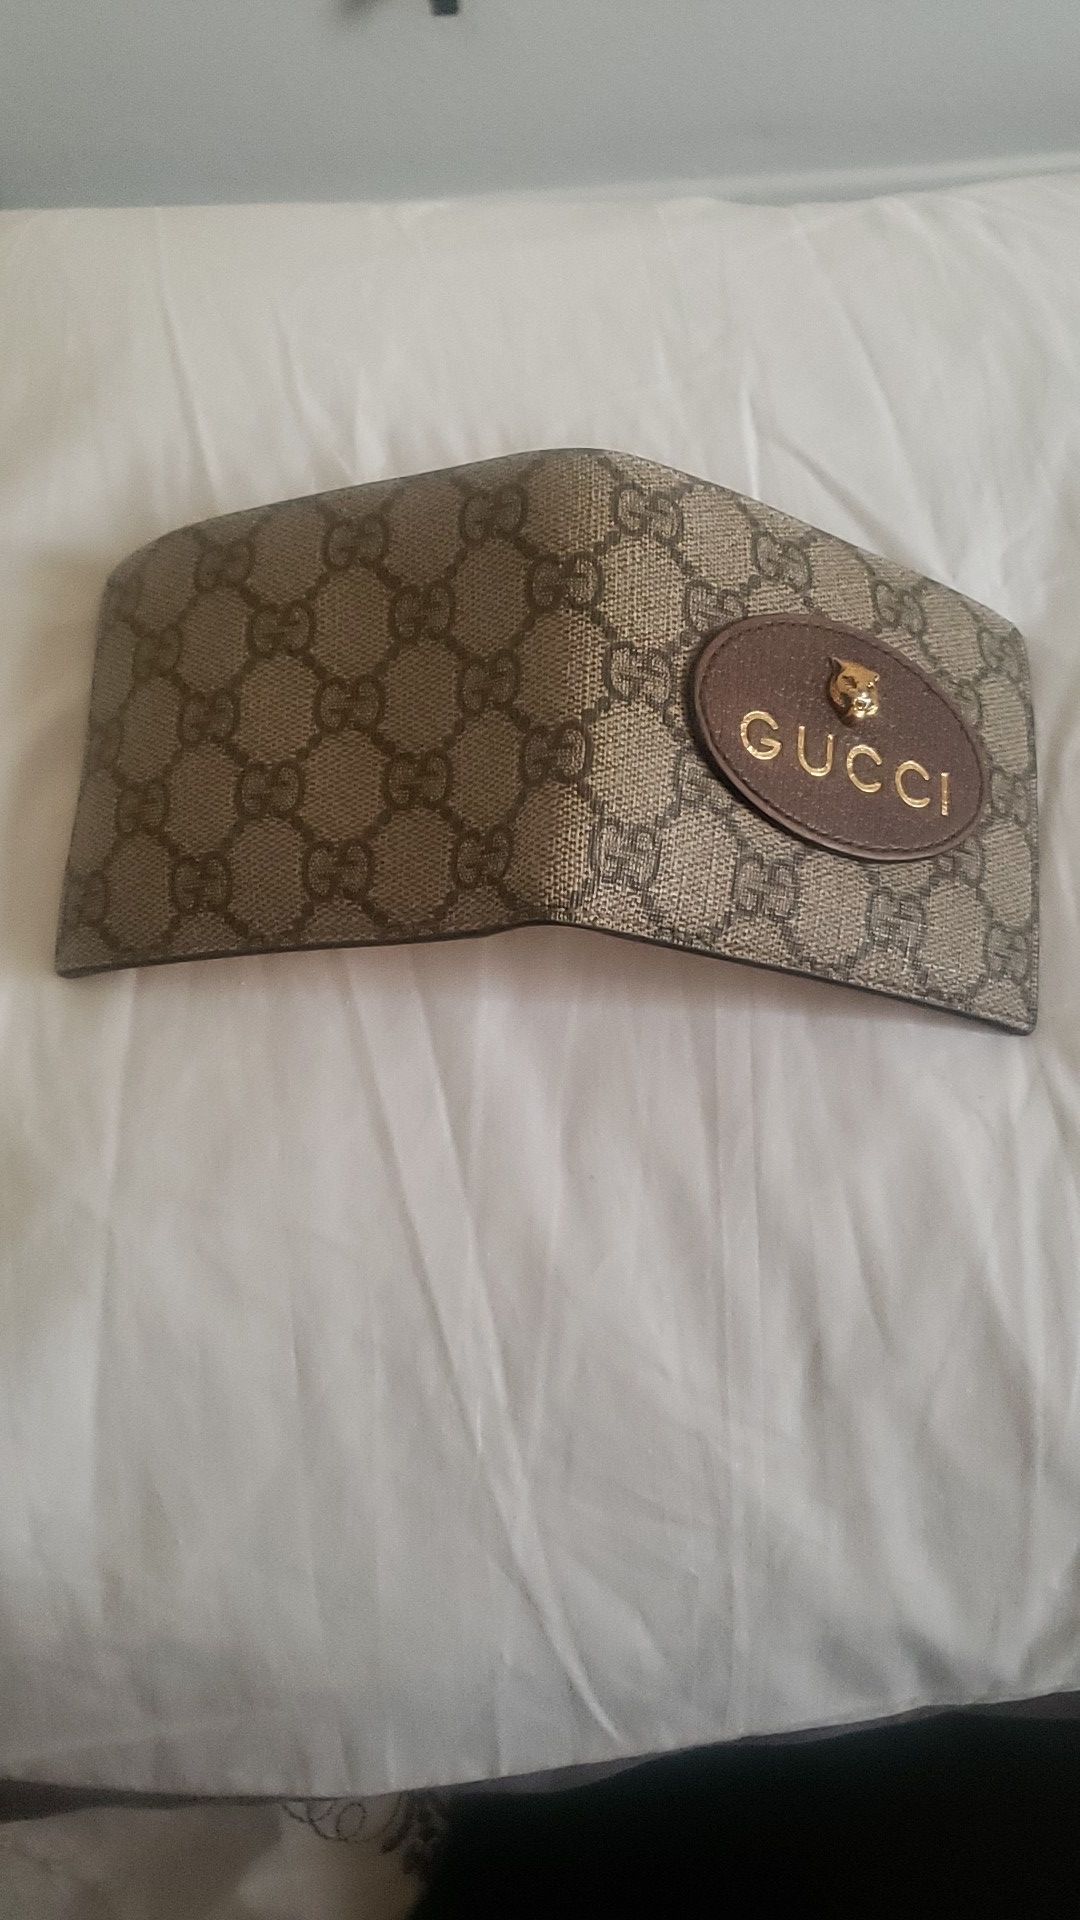 Gucci mens wallet like new